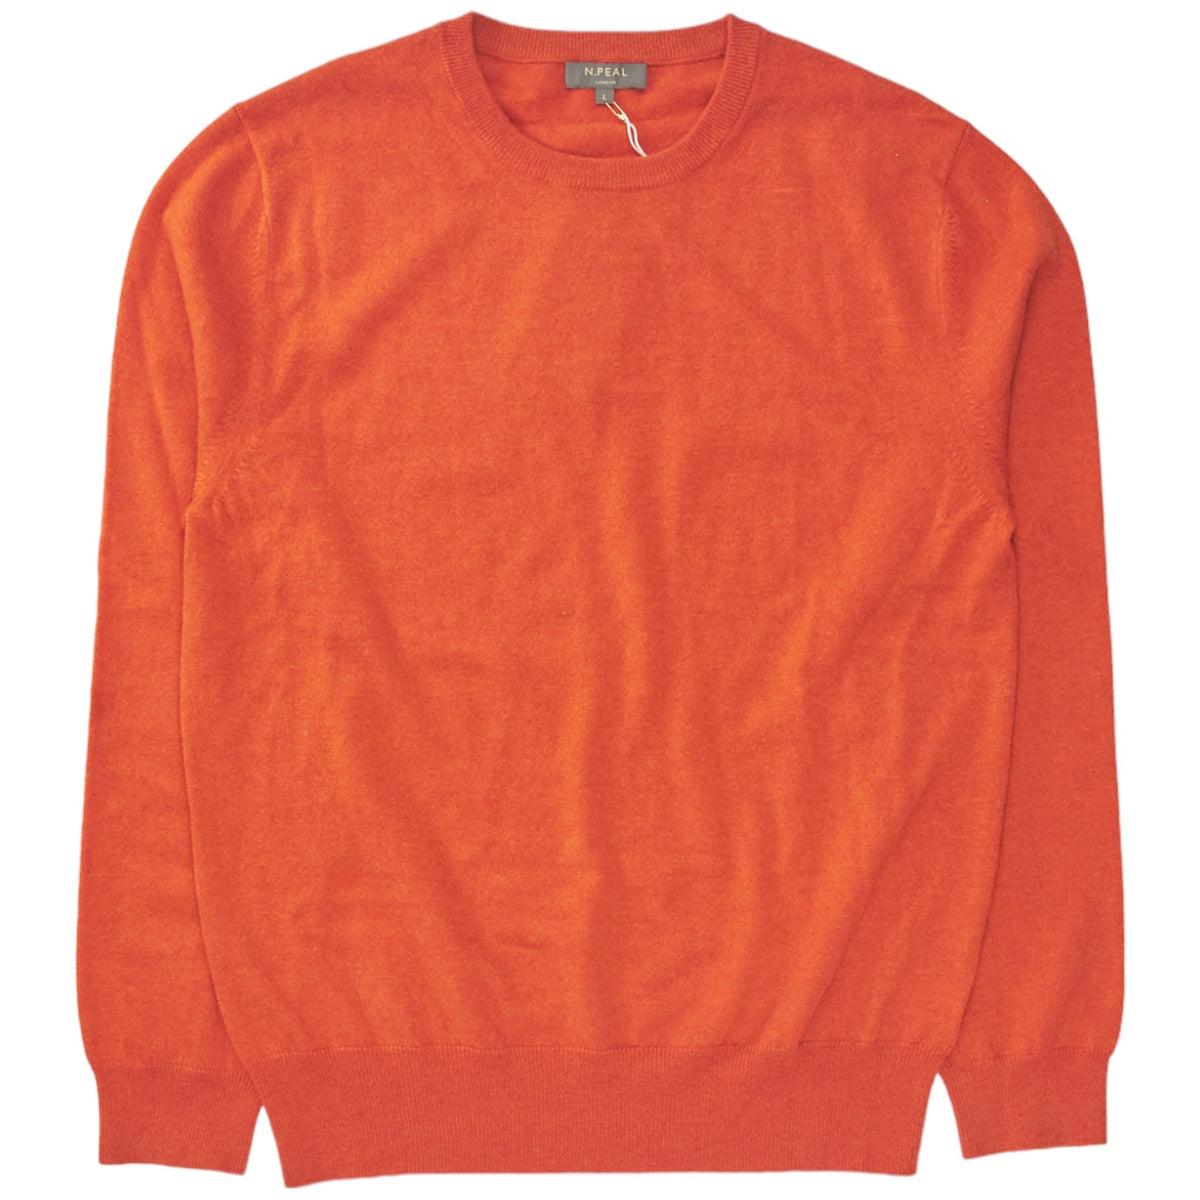 N. Peal Orange Cashmere Sweater